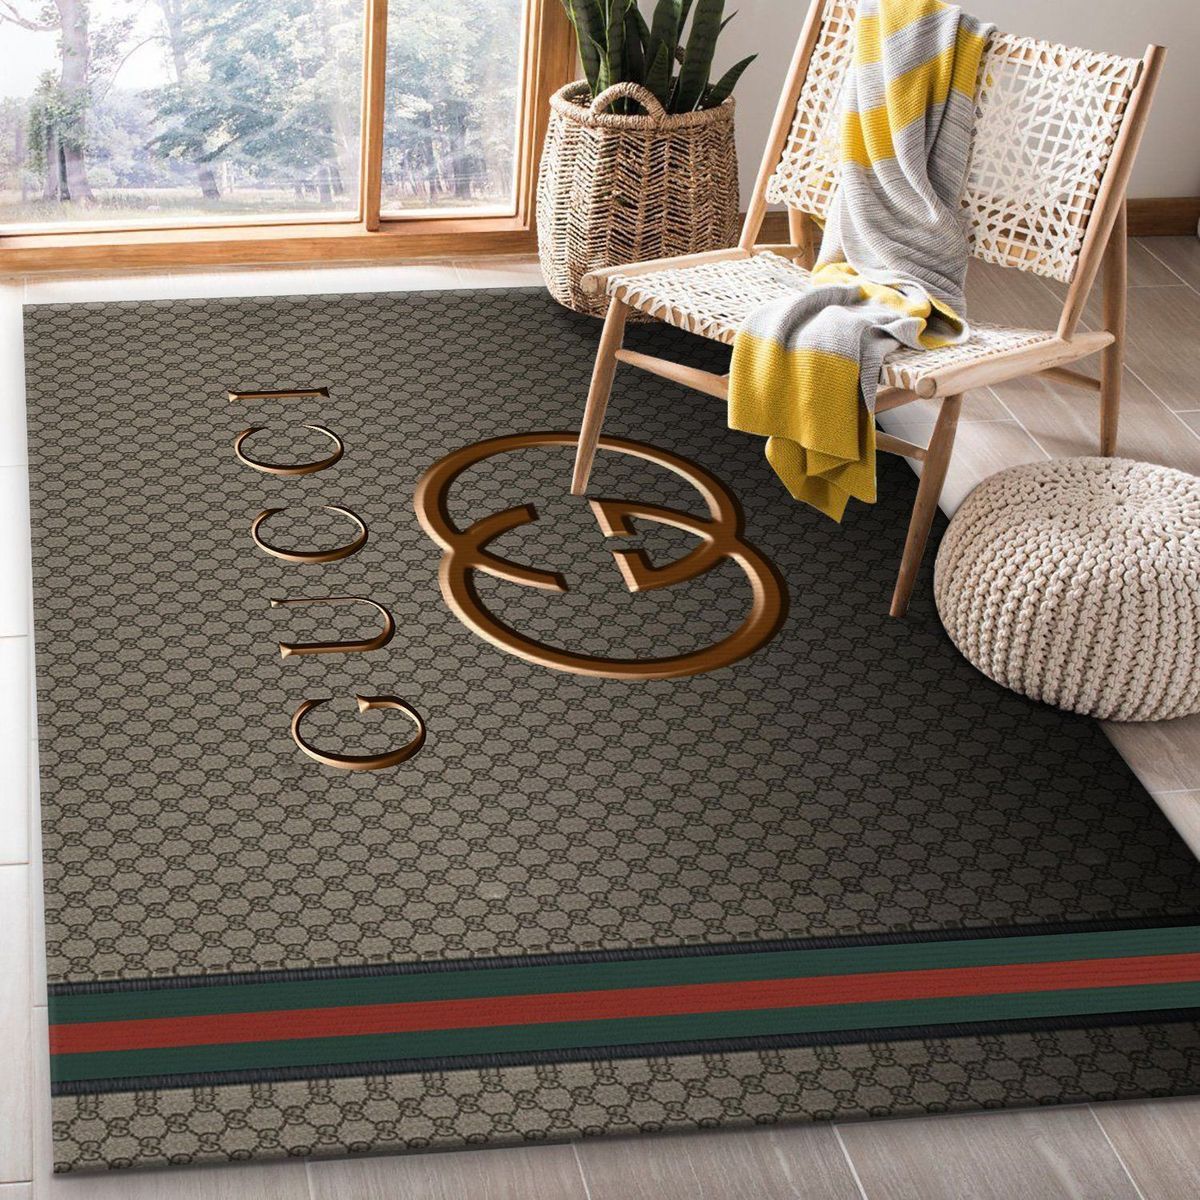 Guccu Gold Logo Luxury Brand Carpet Rug Limited Edition